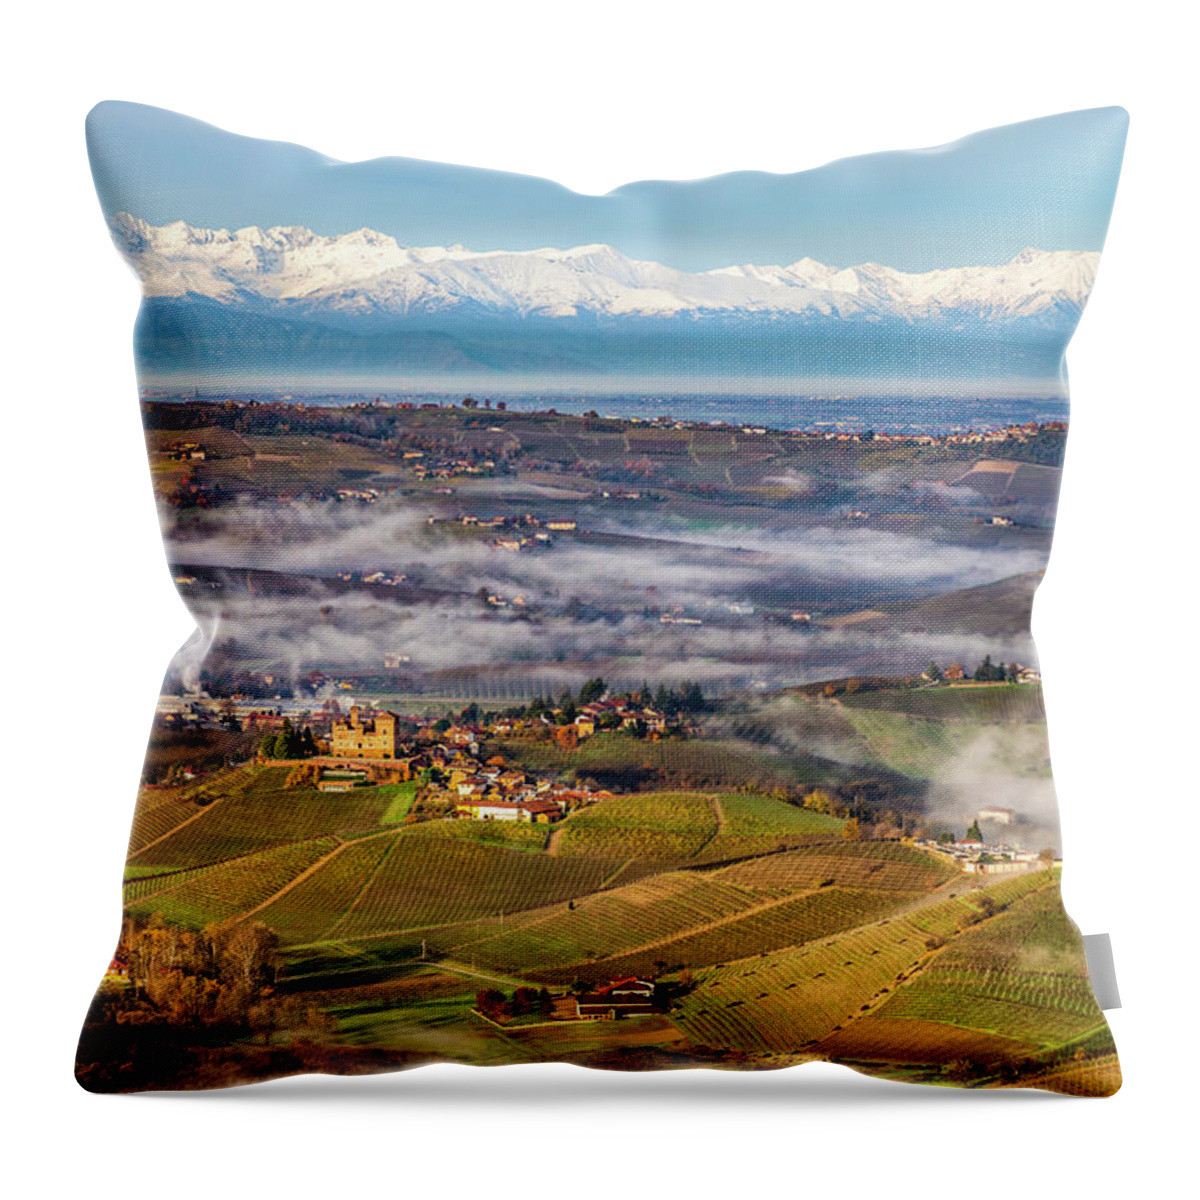 Piedmont Throw Pillow featuring the photograph Piedmont Landscape by Elvira Peretsman